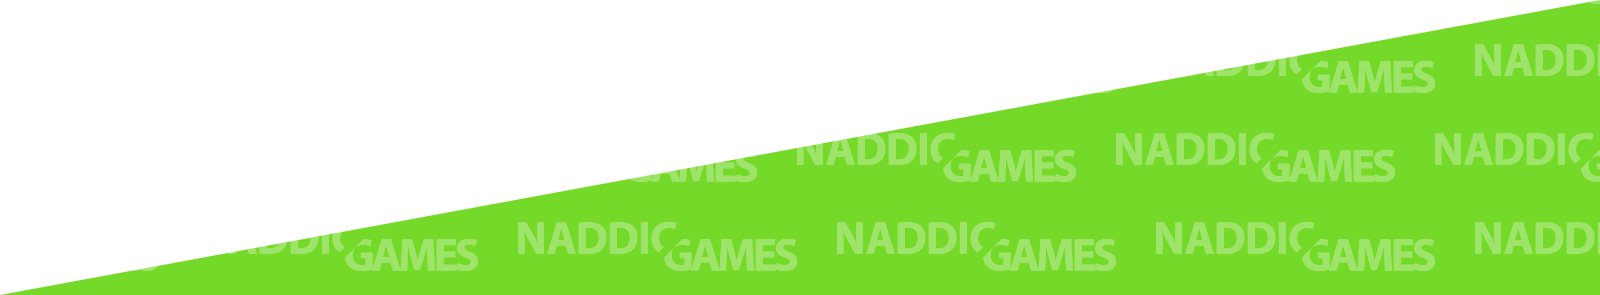 NADDIC GAMES